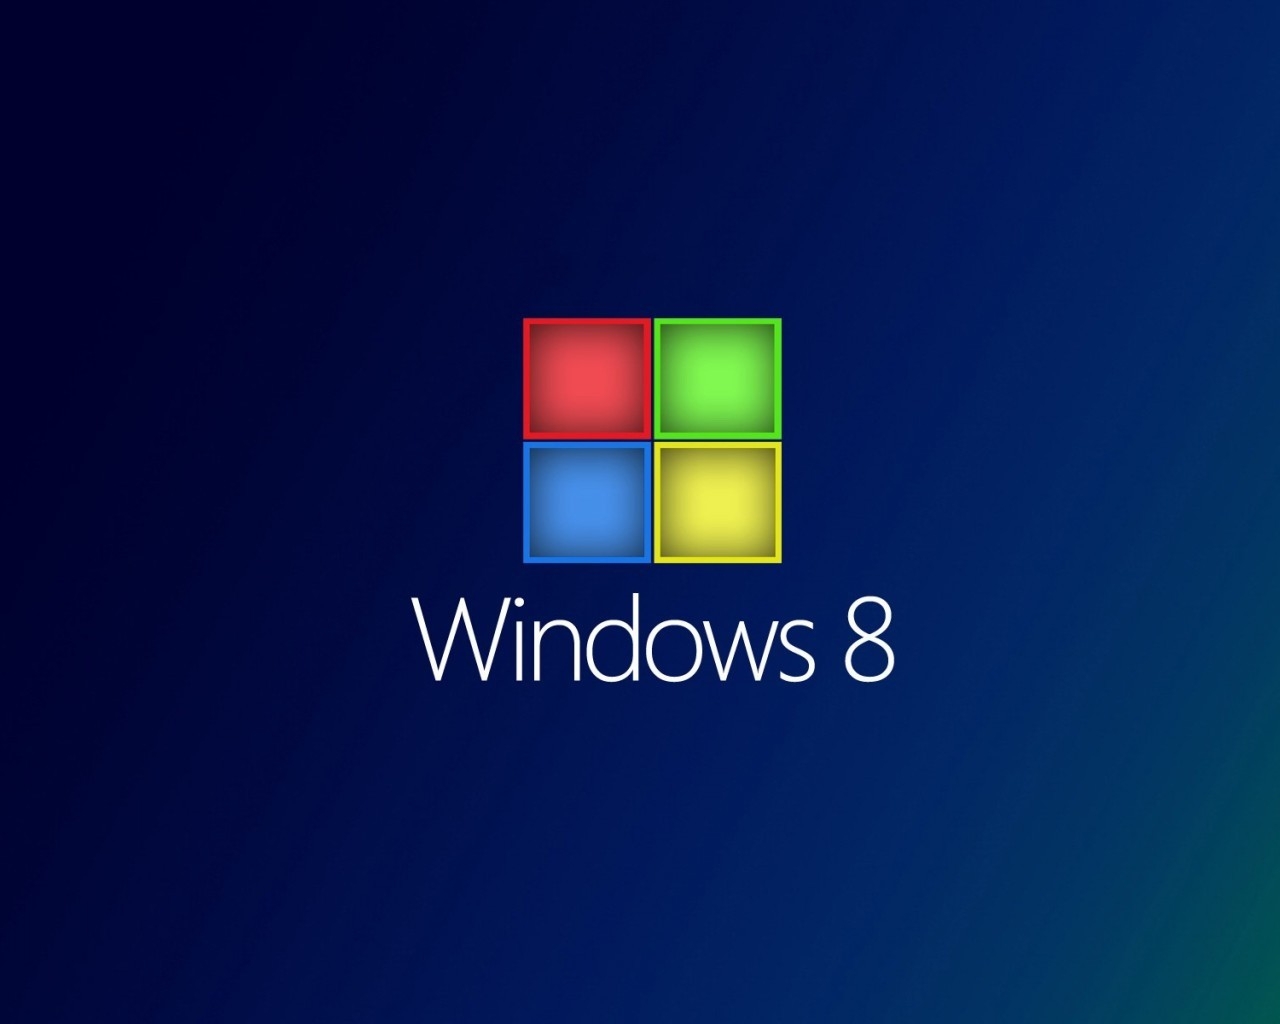 Cool Windows 8 Logo for 1280 x 1024 resolution